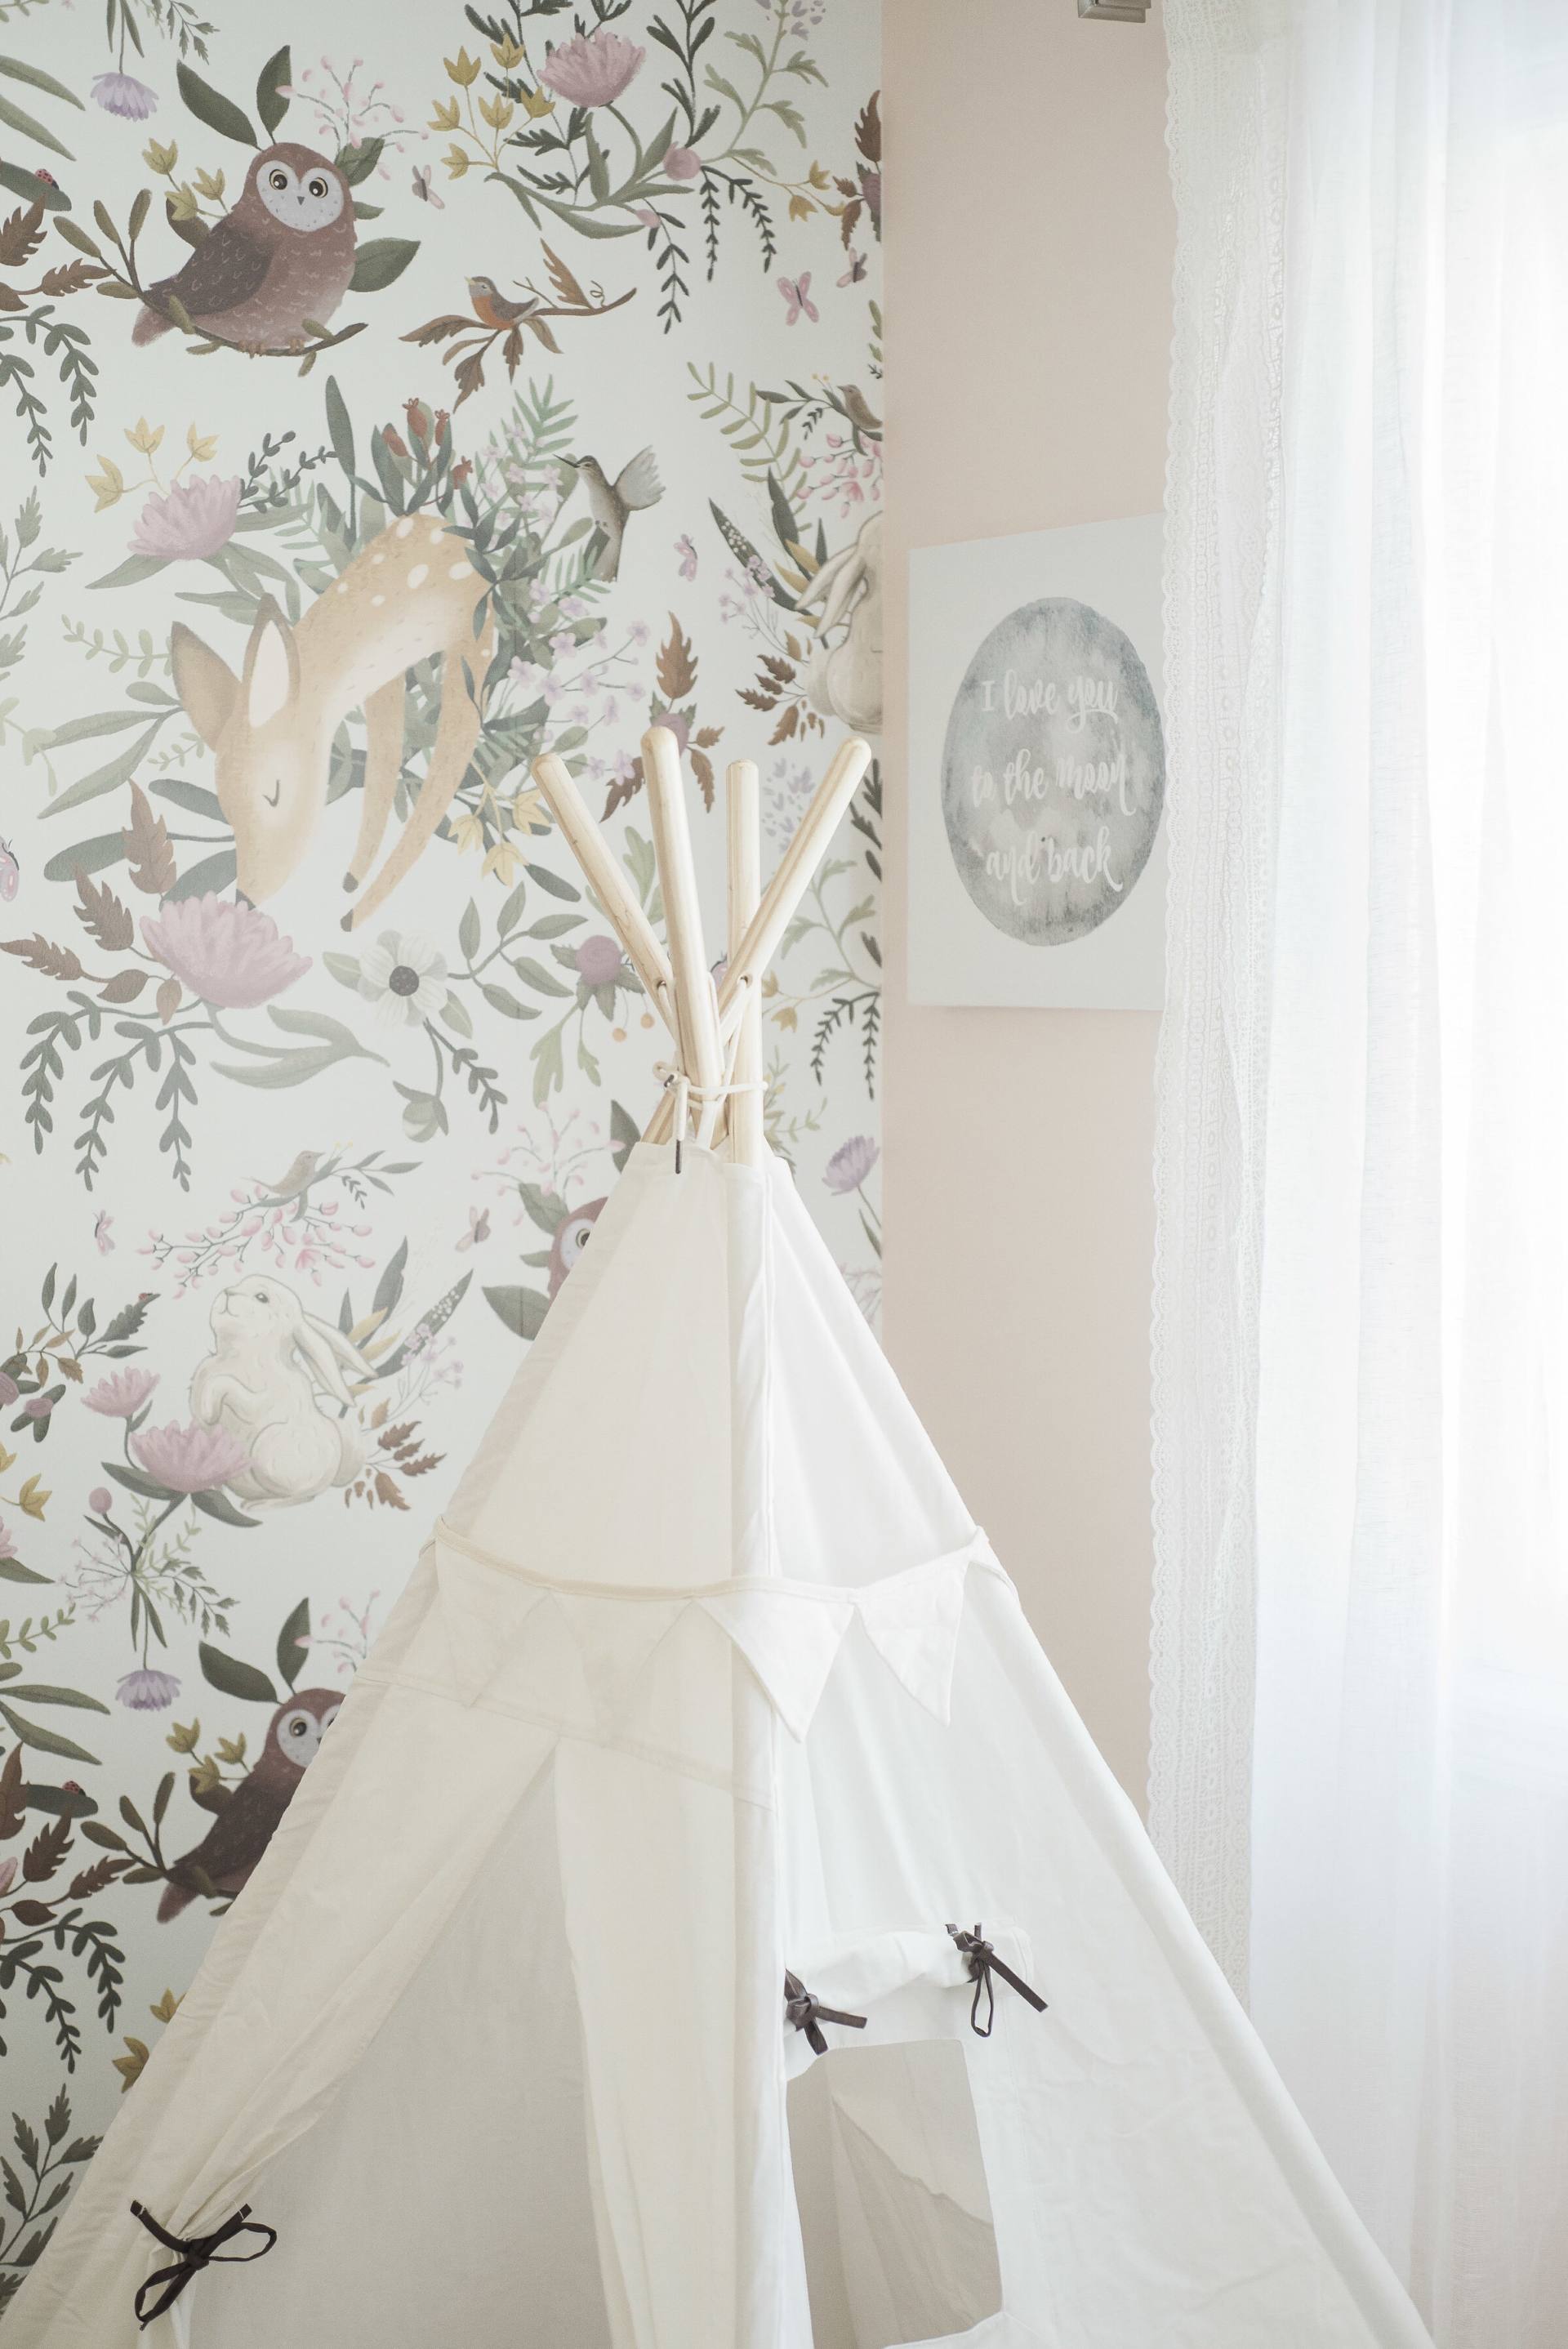 Toddler Bedroom On A Budget - Renee M LeBlanc